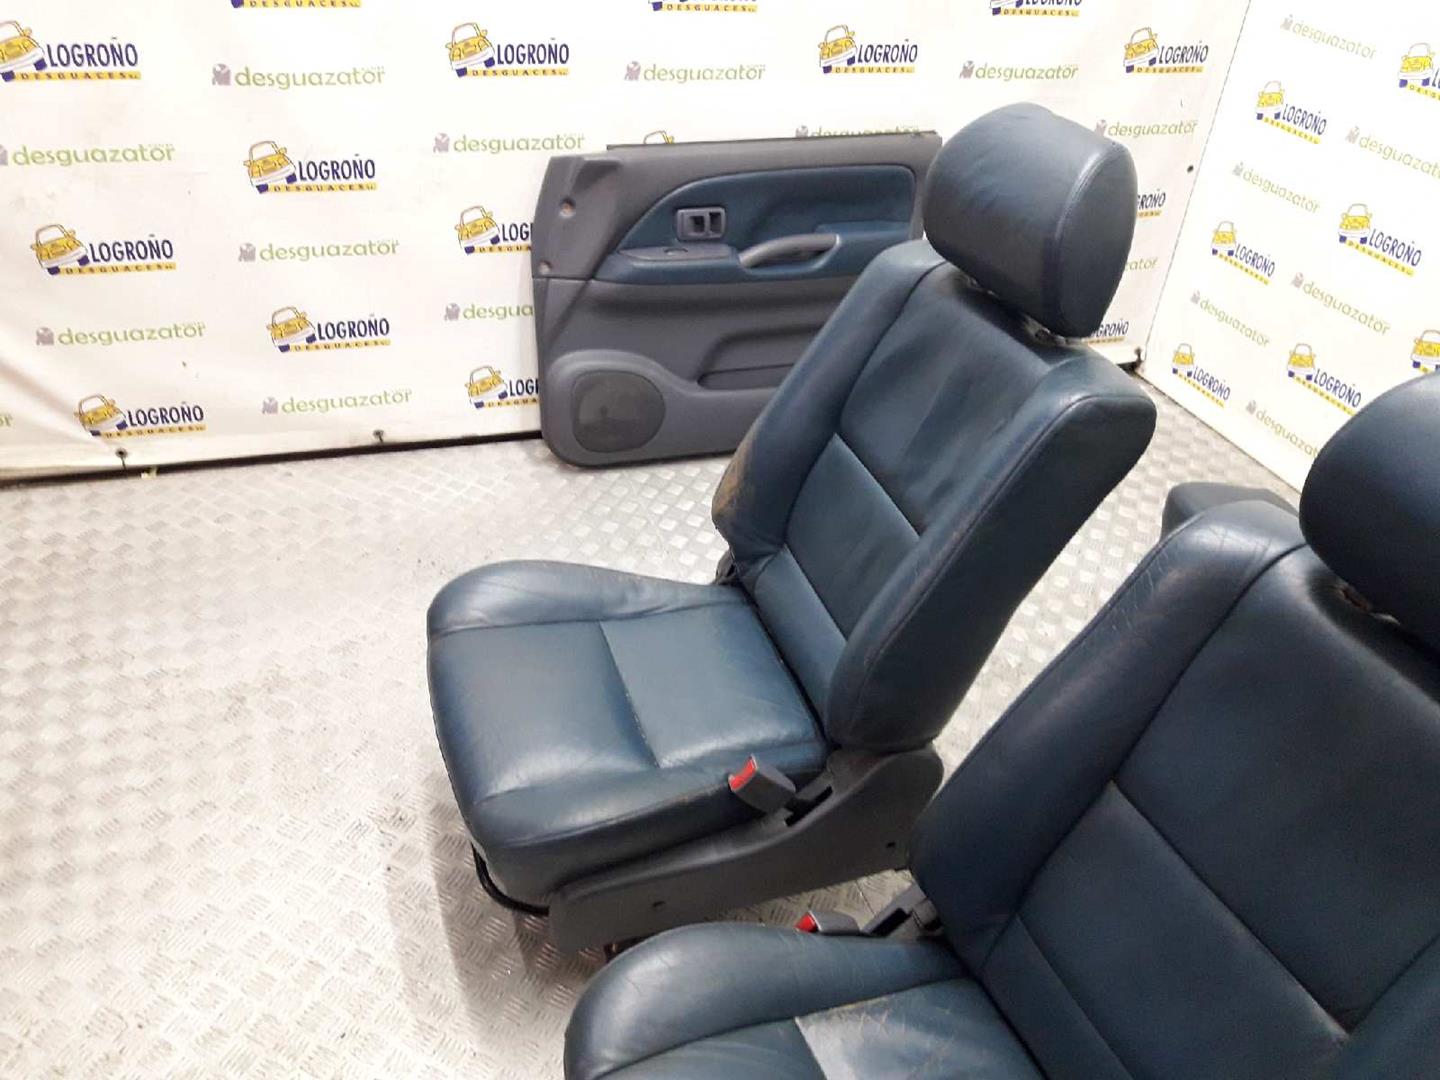 TOYOTA Land Cruiser Prado 90 Series (1996-2002) Seats ASIENTOSDECUERO, COLORAZUL 24549596